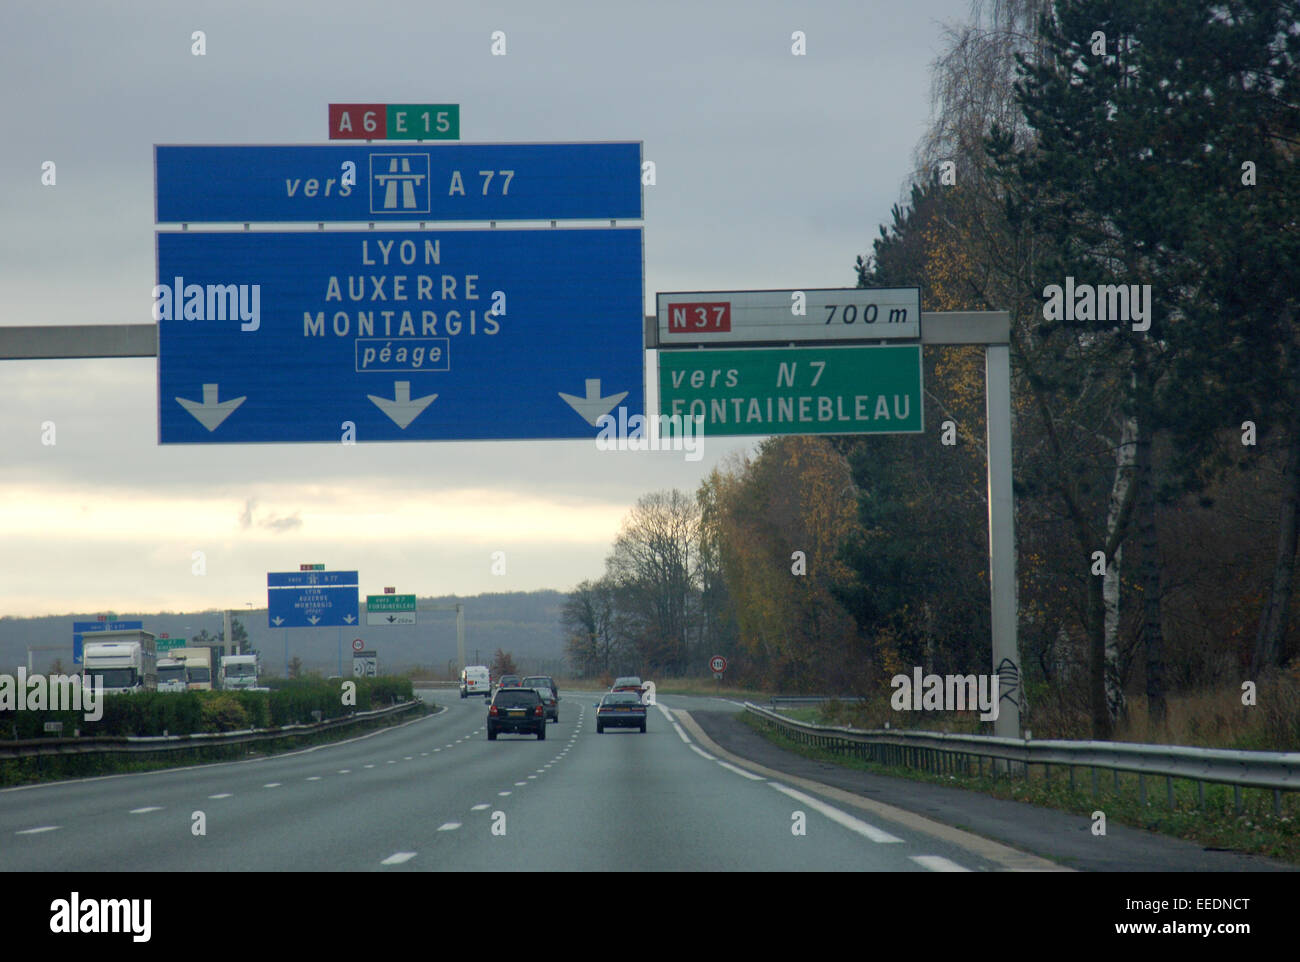 E15 A77 Autoroute A6 Autobahn durch Frankreich, Lyon, Auxerre und Montargis Peage abonnieren und Ausfahrt N7 Fontainbleau Stockfoto